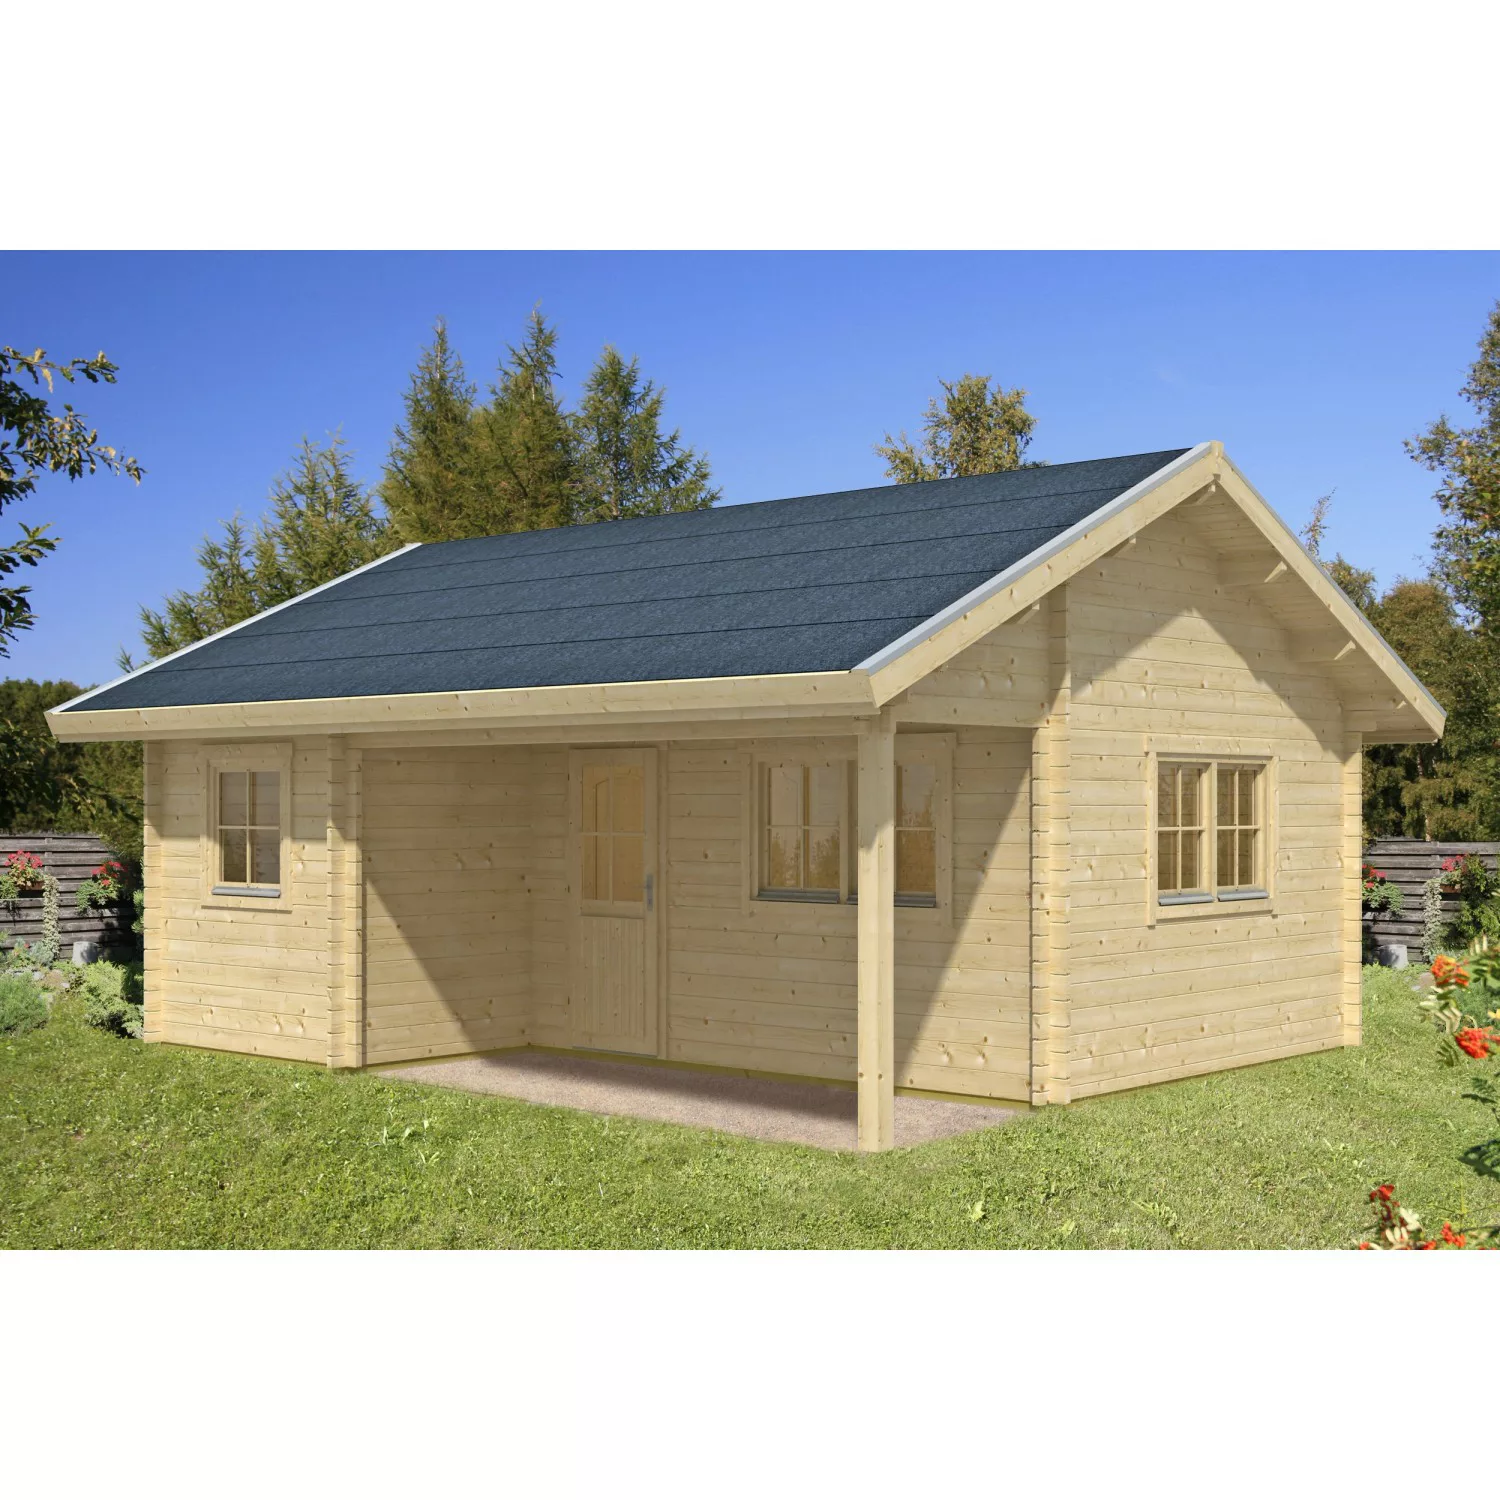 Skan Holz-Gartenhaus Ontario Basishaus B x T 600 cm x 500 cm günstig online kaufen